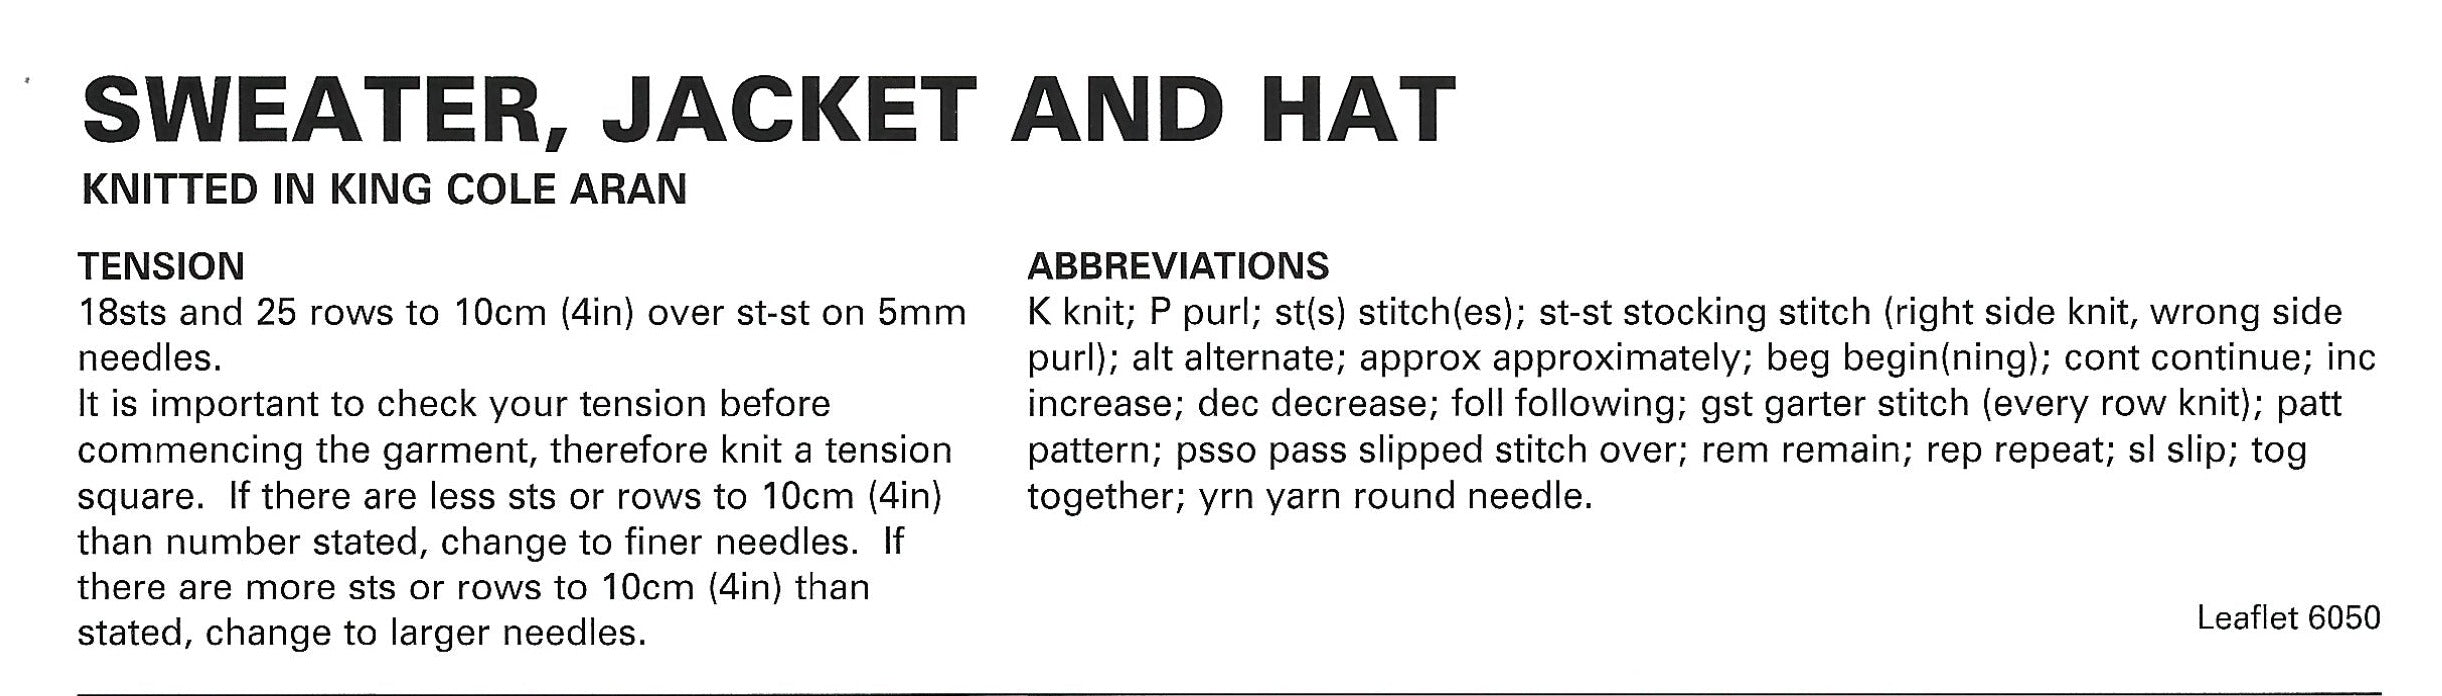 King Cole 6050 Aran Baby Knitting Pattern - Sweater, Jacket, & Hat (3 mnths - 4 Yrs)